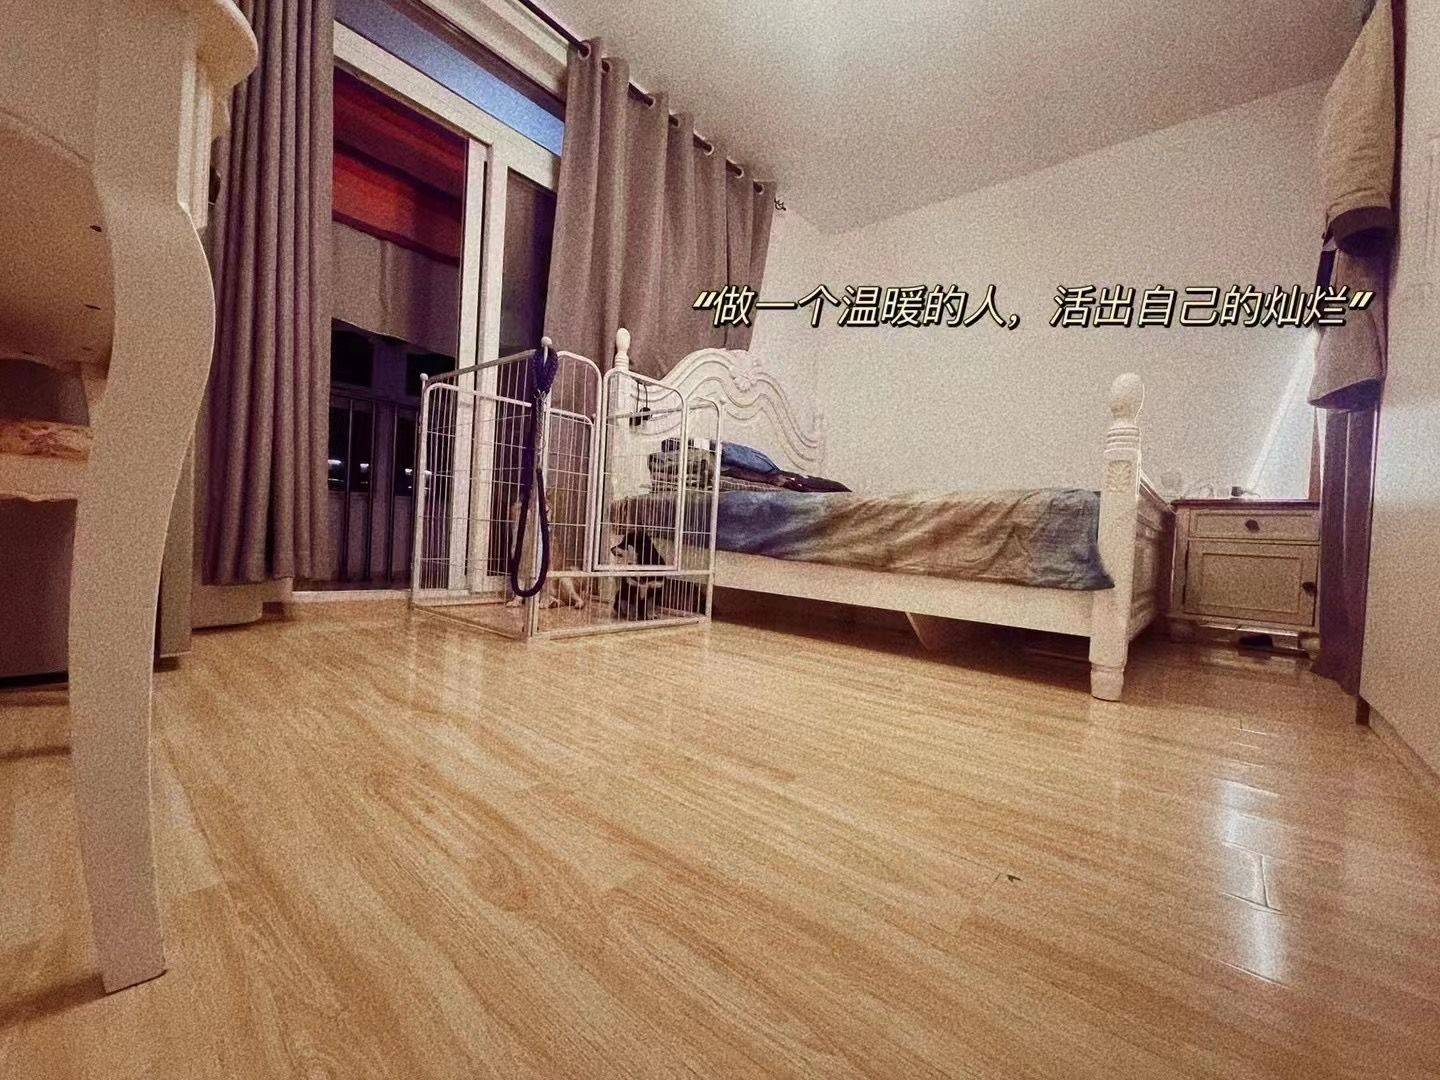 Beijing-Haidian-Sublet,Single Apartment,Short Term,Shared Apartment,Pet Friendly,Replacement,Seeking Flatmate,LGBTQ Friendly,Long & Short Term